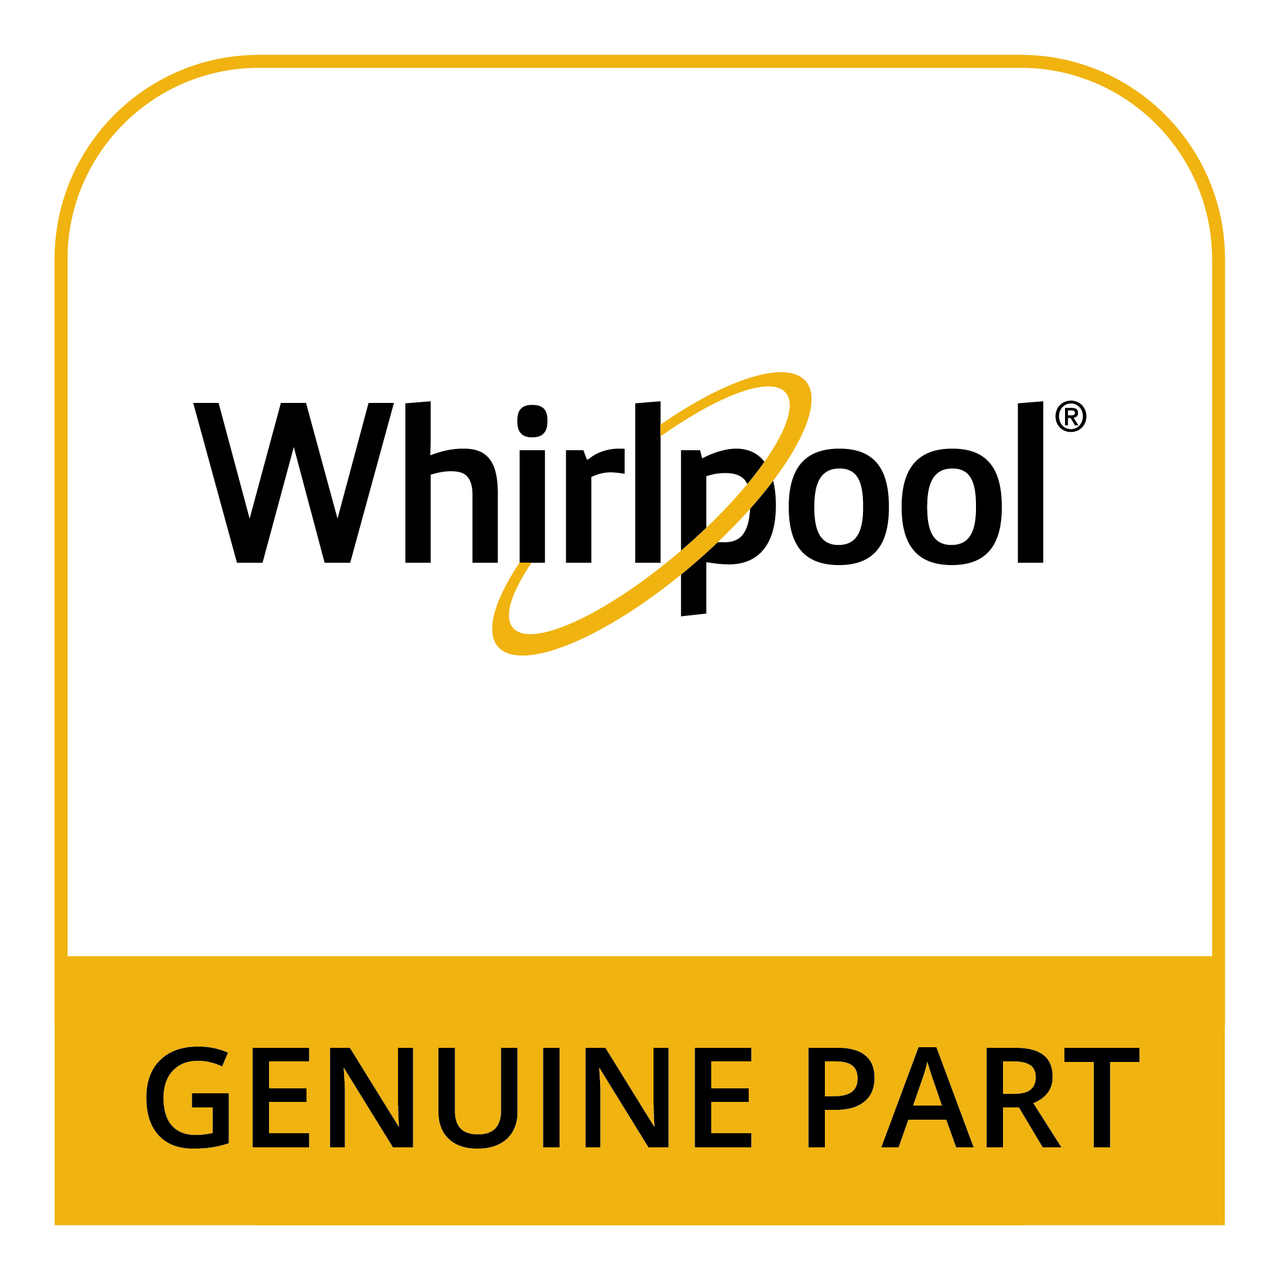 Whirlpool WP349639 - Dryer Lint Filter - Genuine Part